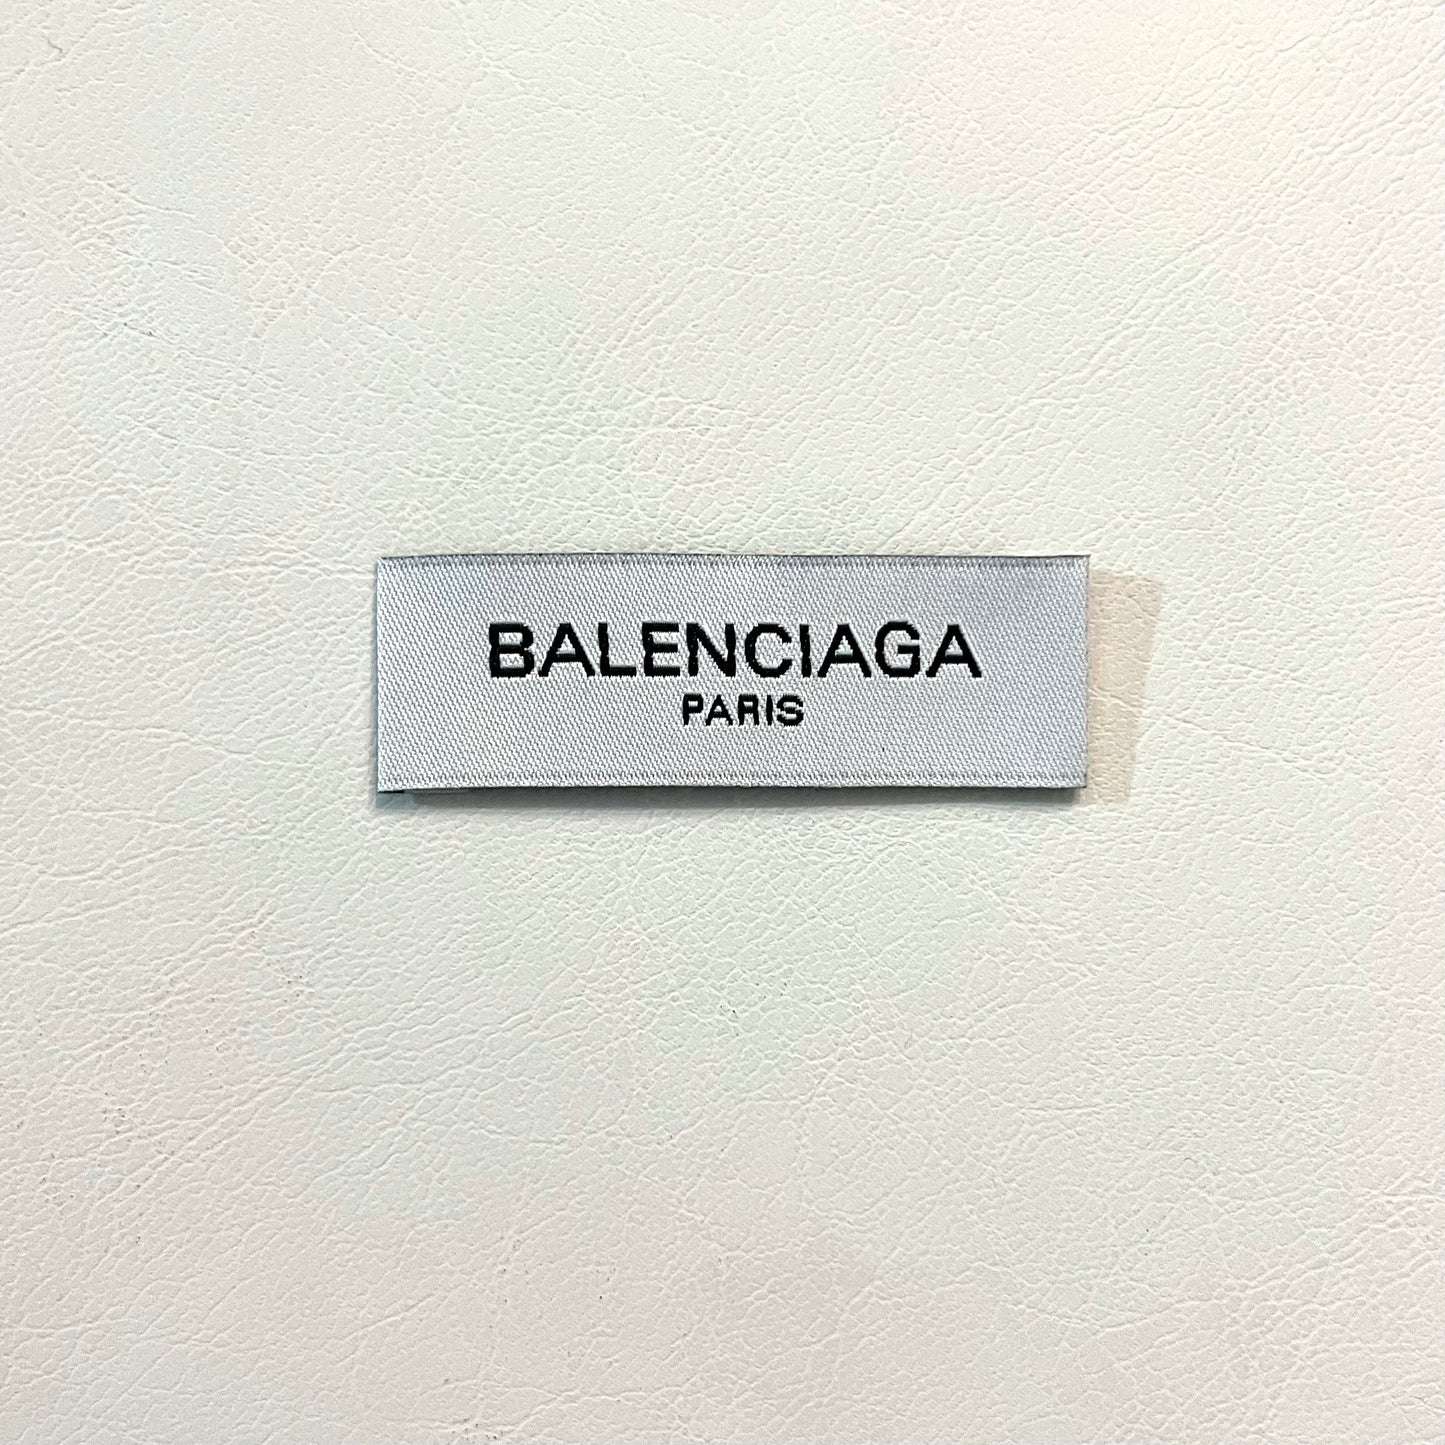 Balenciaga Paris Tag Label for Custom Apparel DIY Sewing Accessories